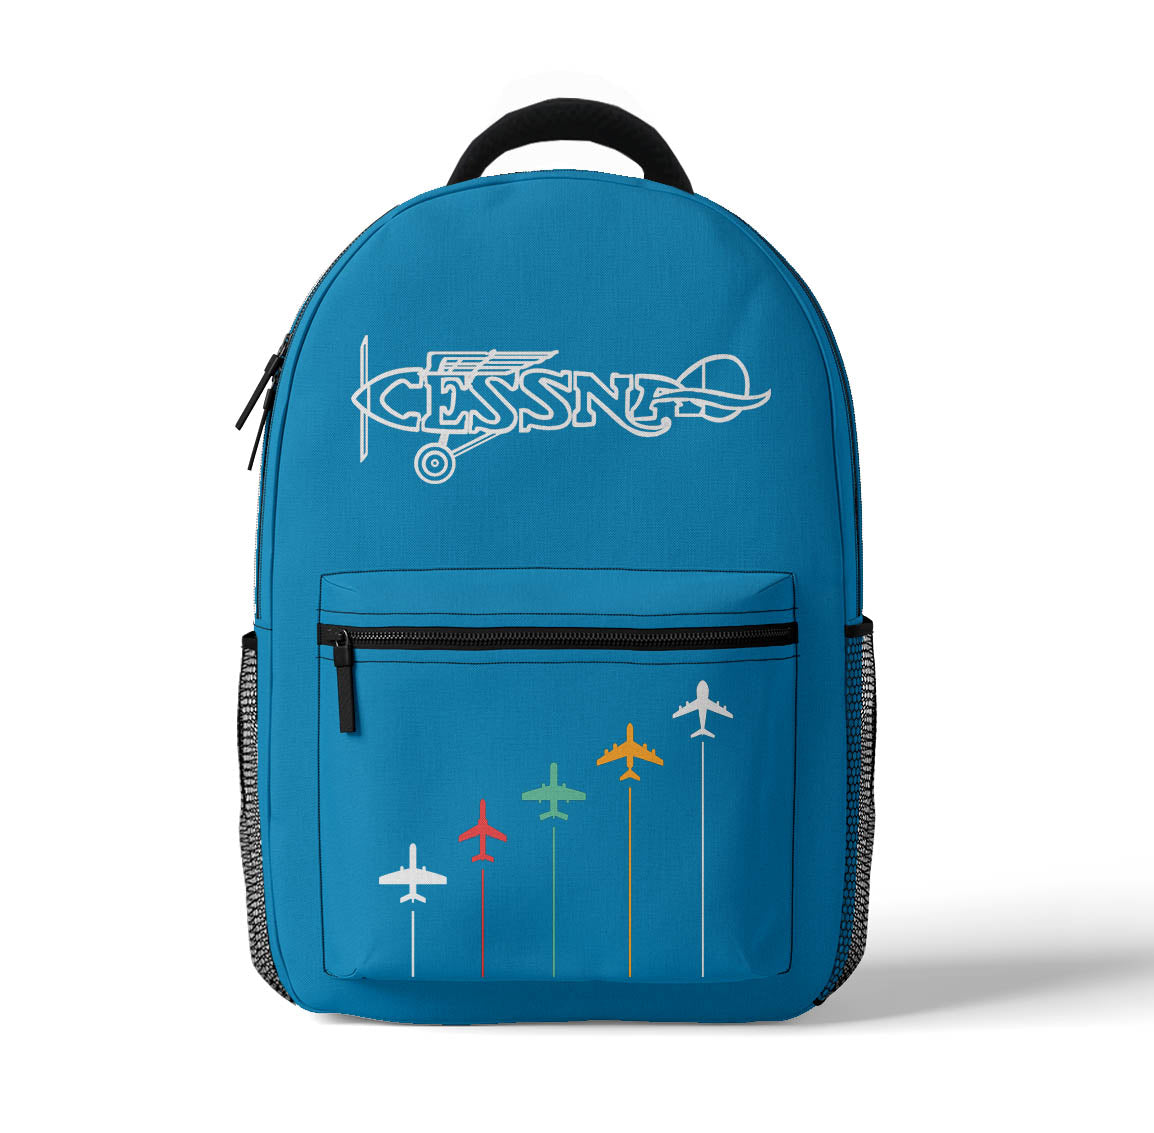 Special Cessna Text Designed 3D Backpacks